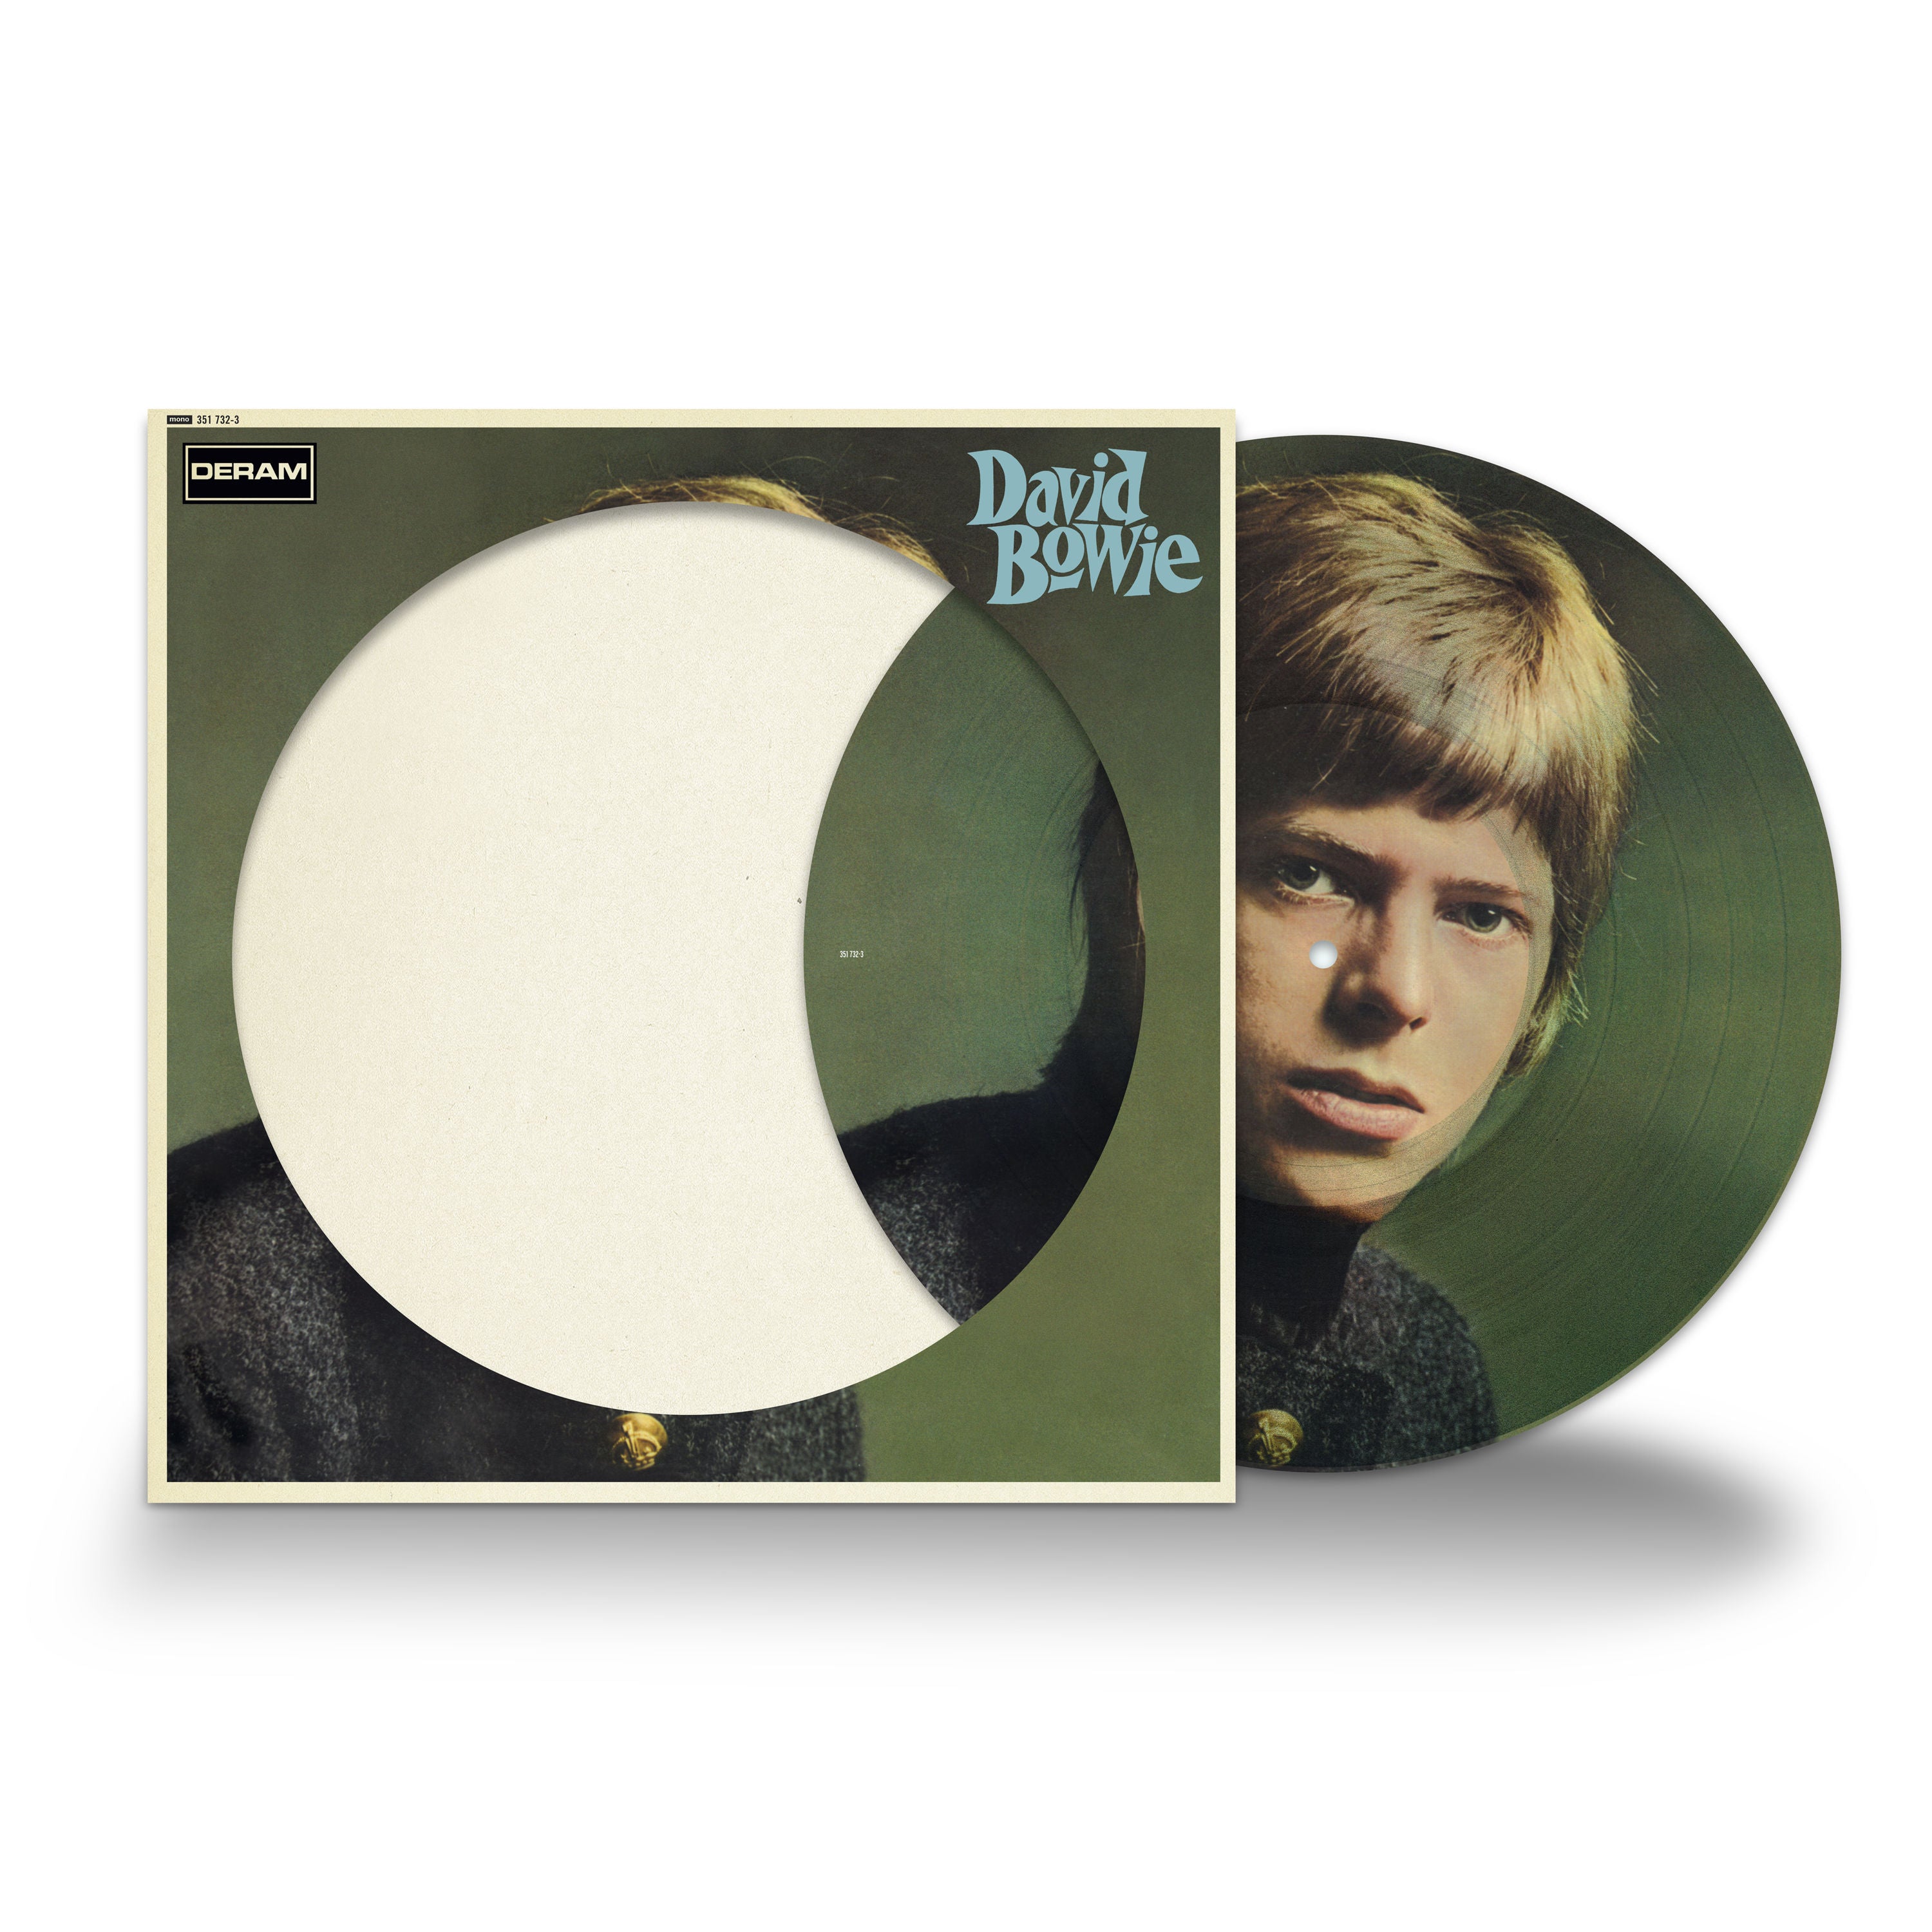 David Bowie - David Bowie: Limited Edition Exclusive Picture Disc LP